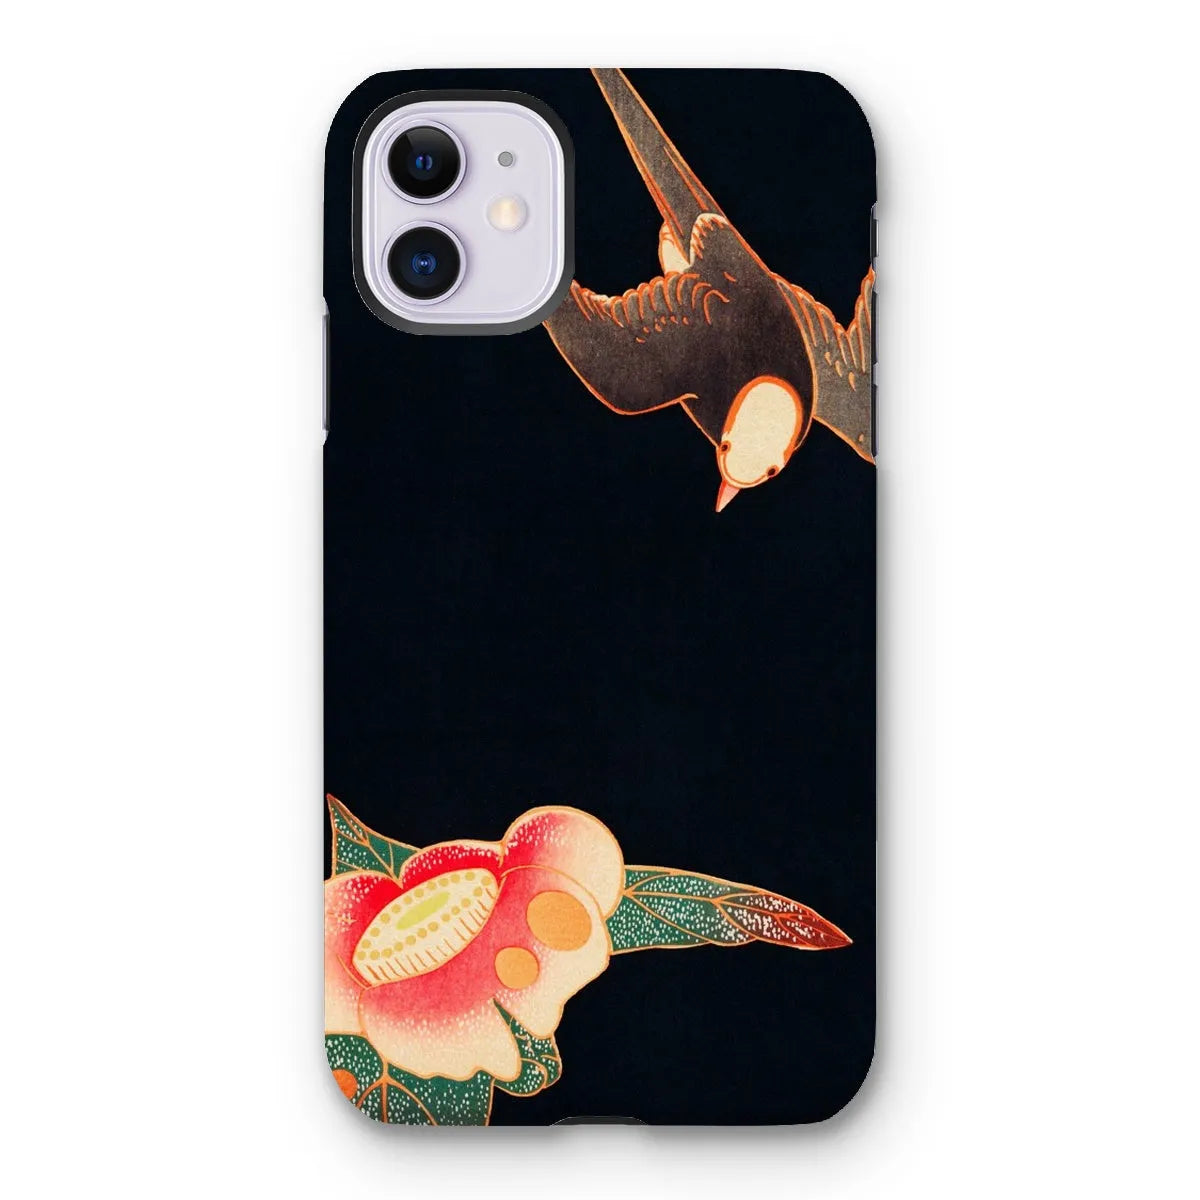 Swallow & Camellia - Meiji Era Art Phone Case - Ito Jakuchu - Iphone 11 / Matte - Mobile Phone Cases - Aesthetic Art